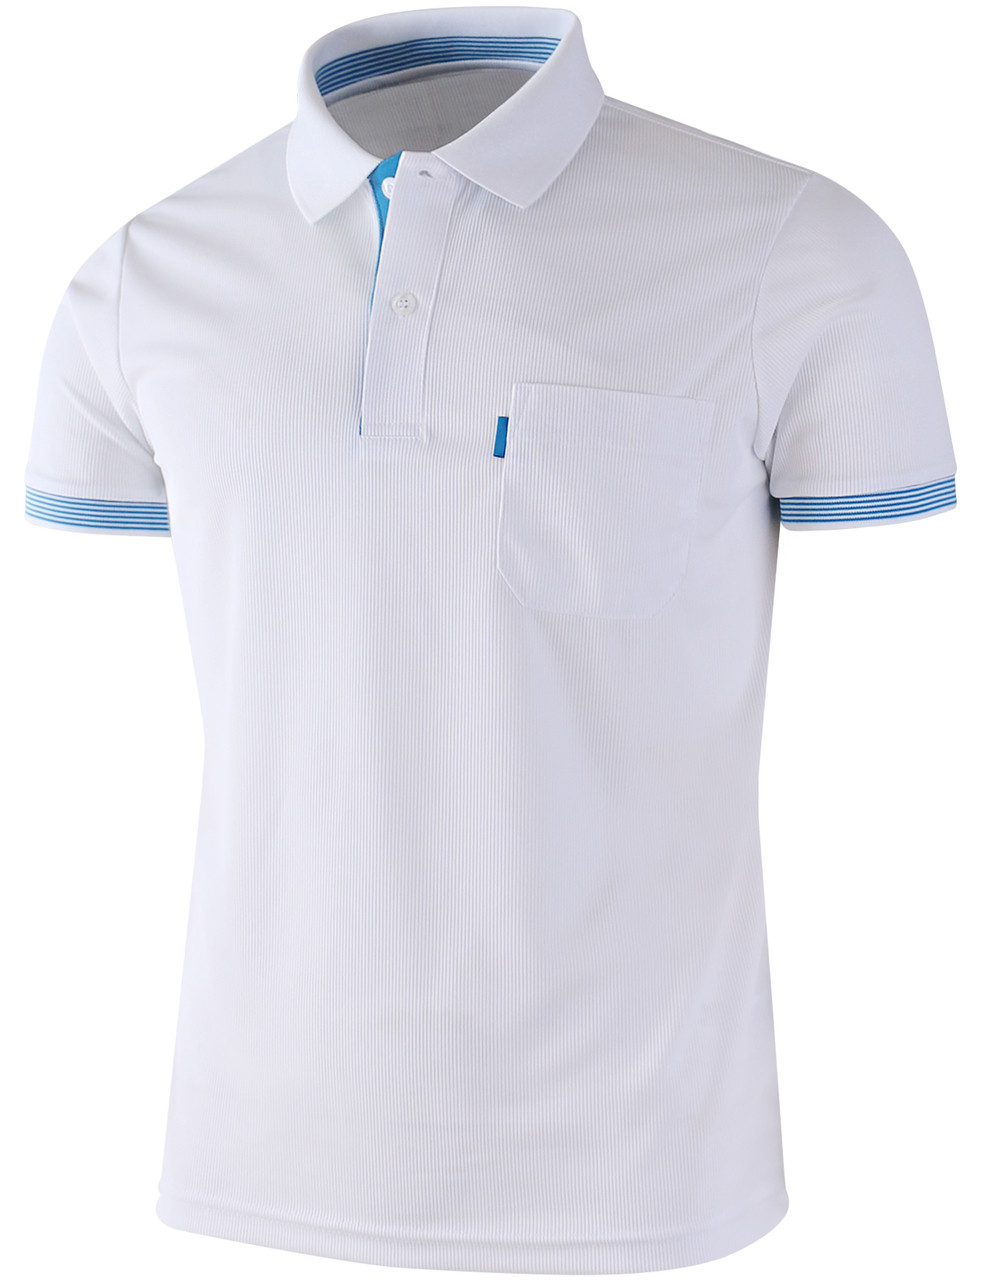 Coolon polo shirt short sleeves-5 colors-Unisex